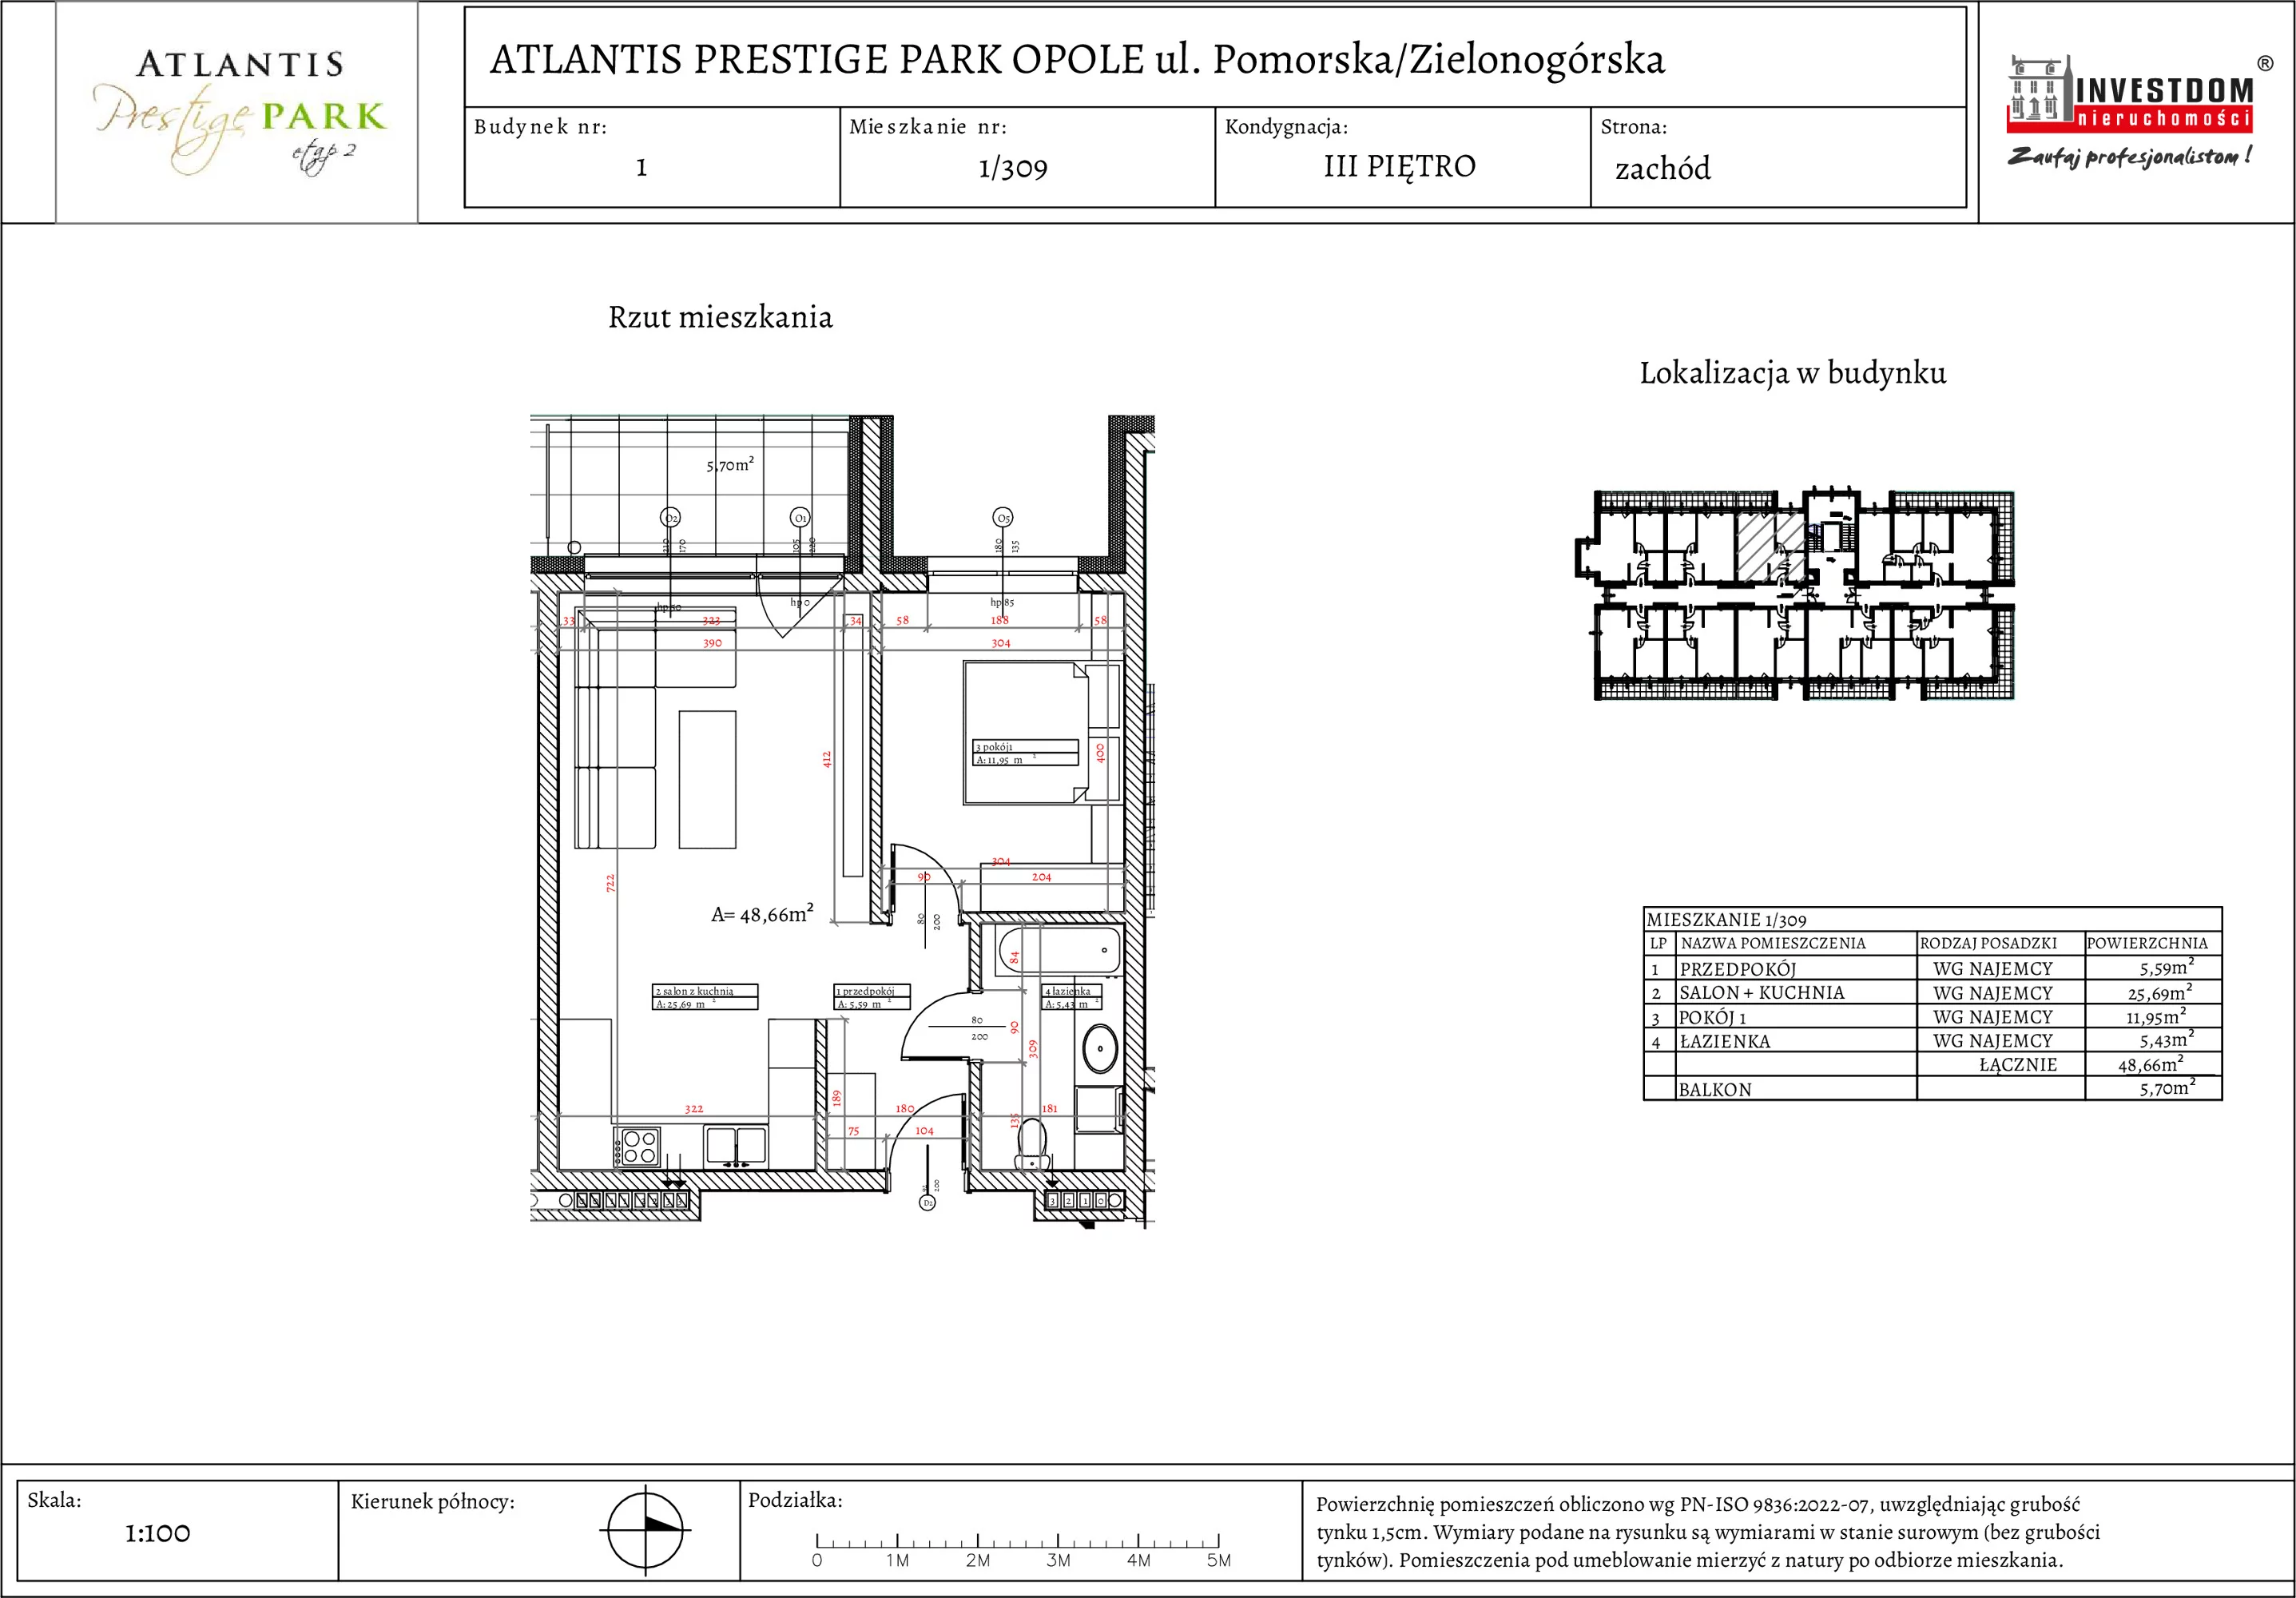 Apartament 48,66 m², piętro 3, oferta nr 1/309, Atlantis Prestige Park, Opole, Malinka, ul. Pomorska / Zielonogórska / Harcmistrza Kamińskiego